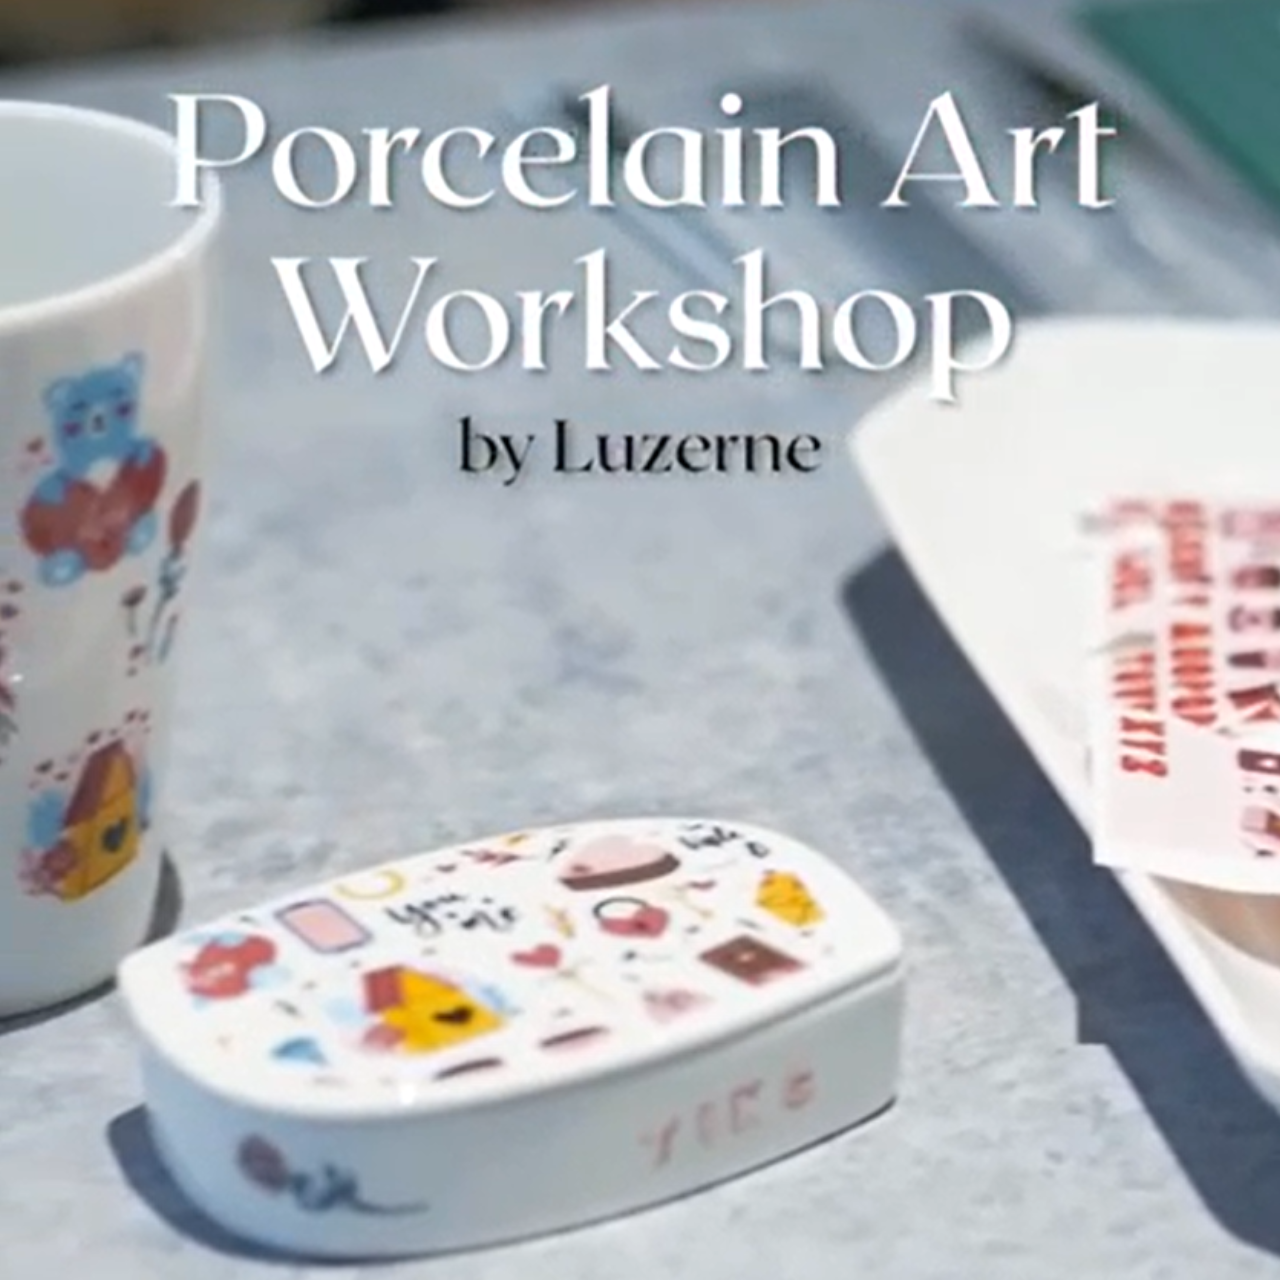 Porcelain Art Workshop - Group Booking 10 Pax